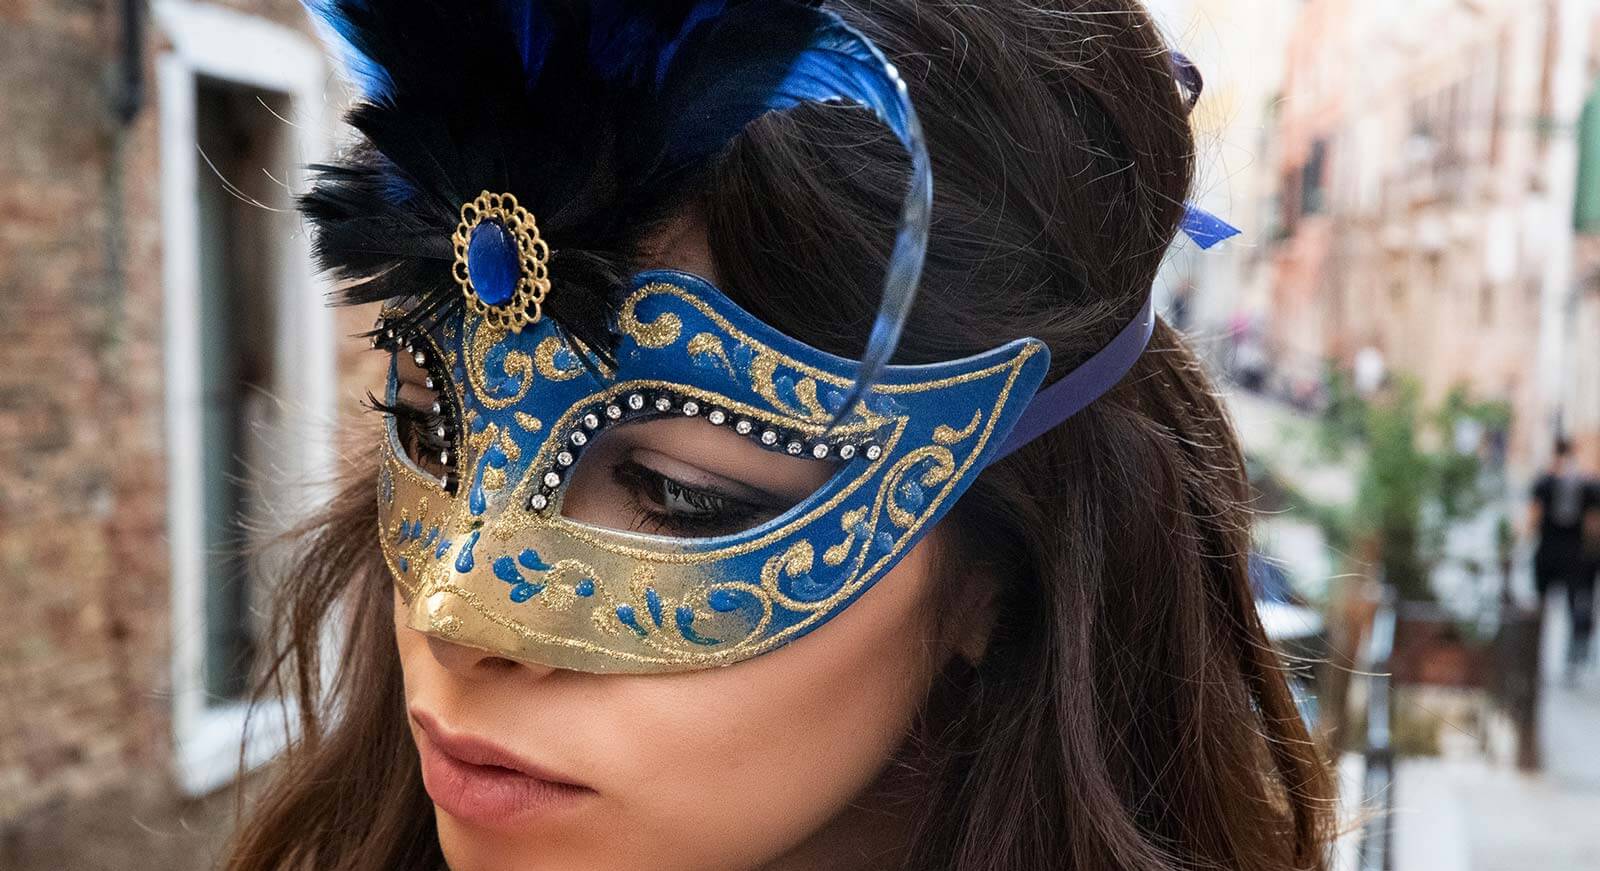 Maschera di Carnevale in stile veneziano da farfalla adulta azzurra